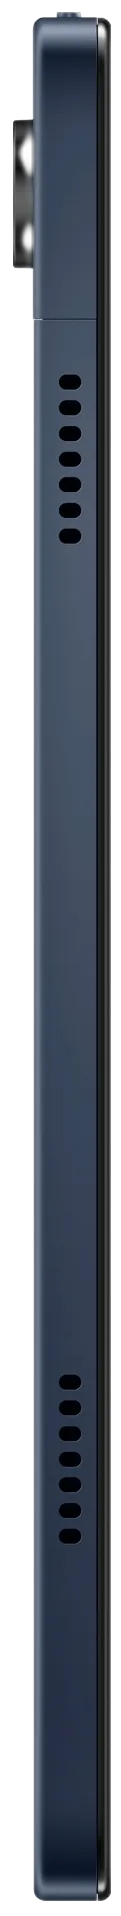 Samsung galaxy tab i9+ wifi laivastonsininen 64gb - 4